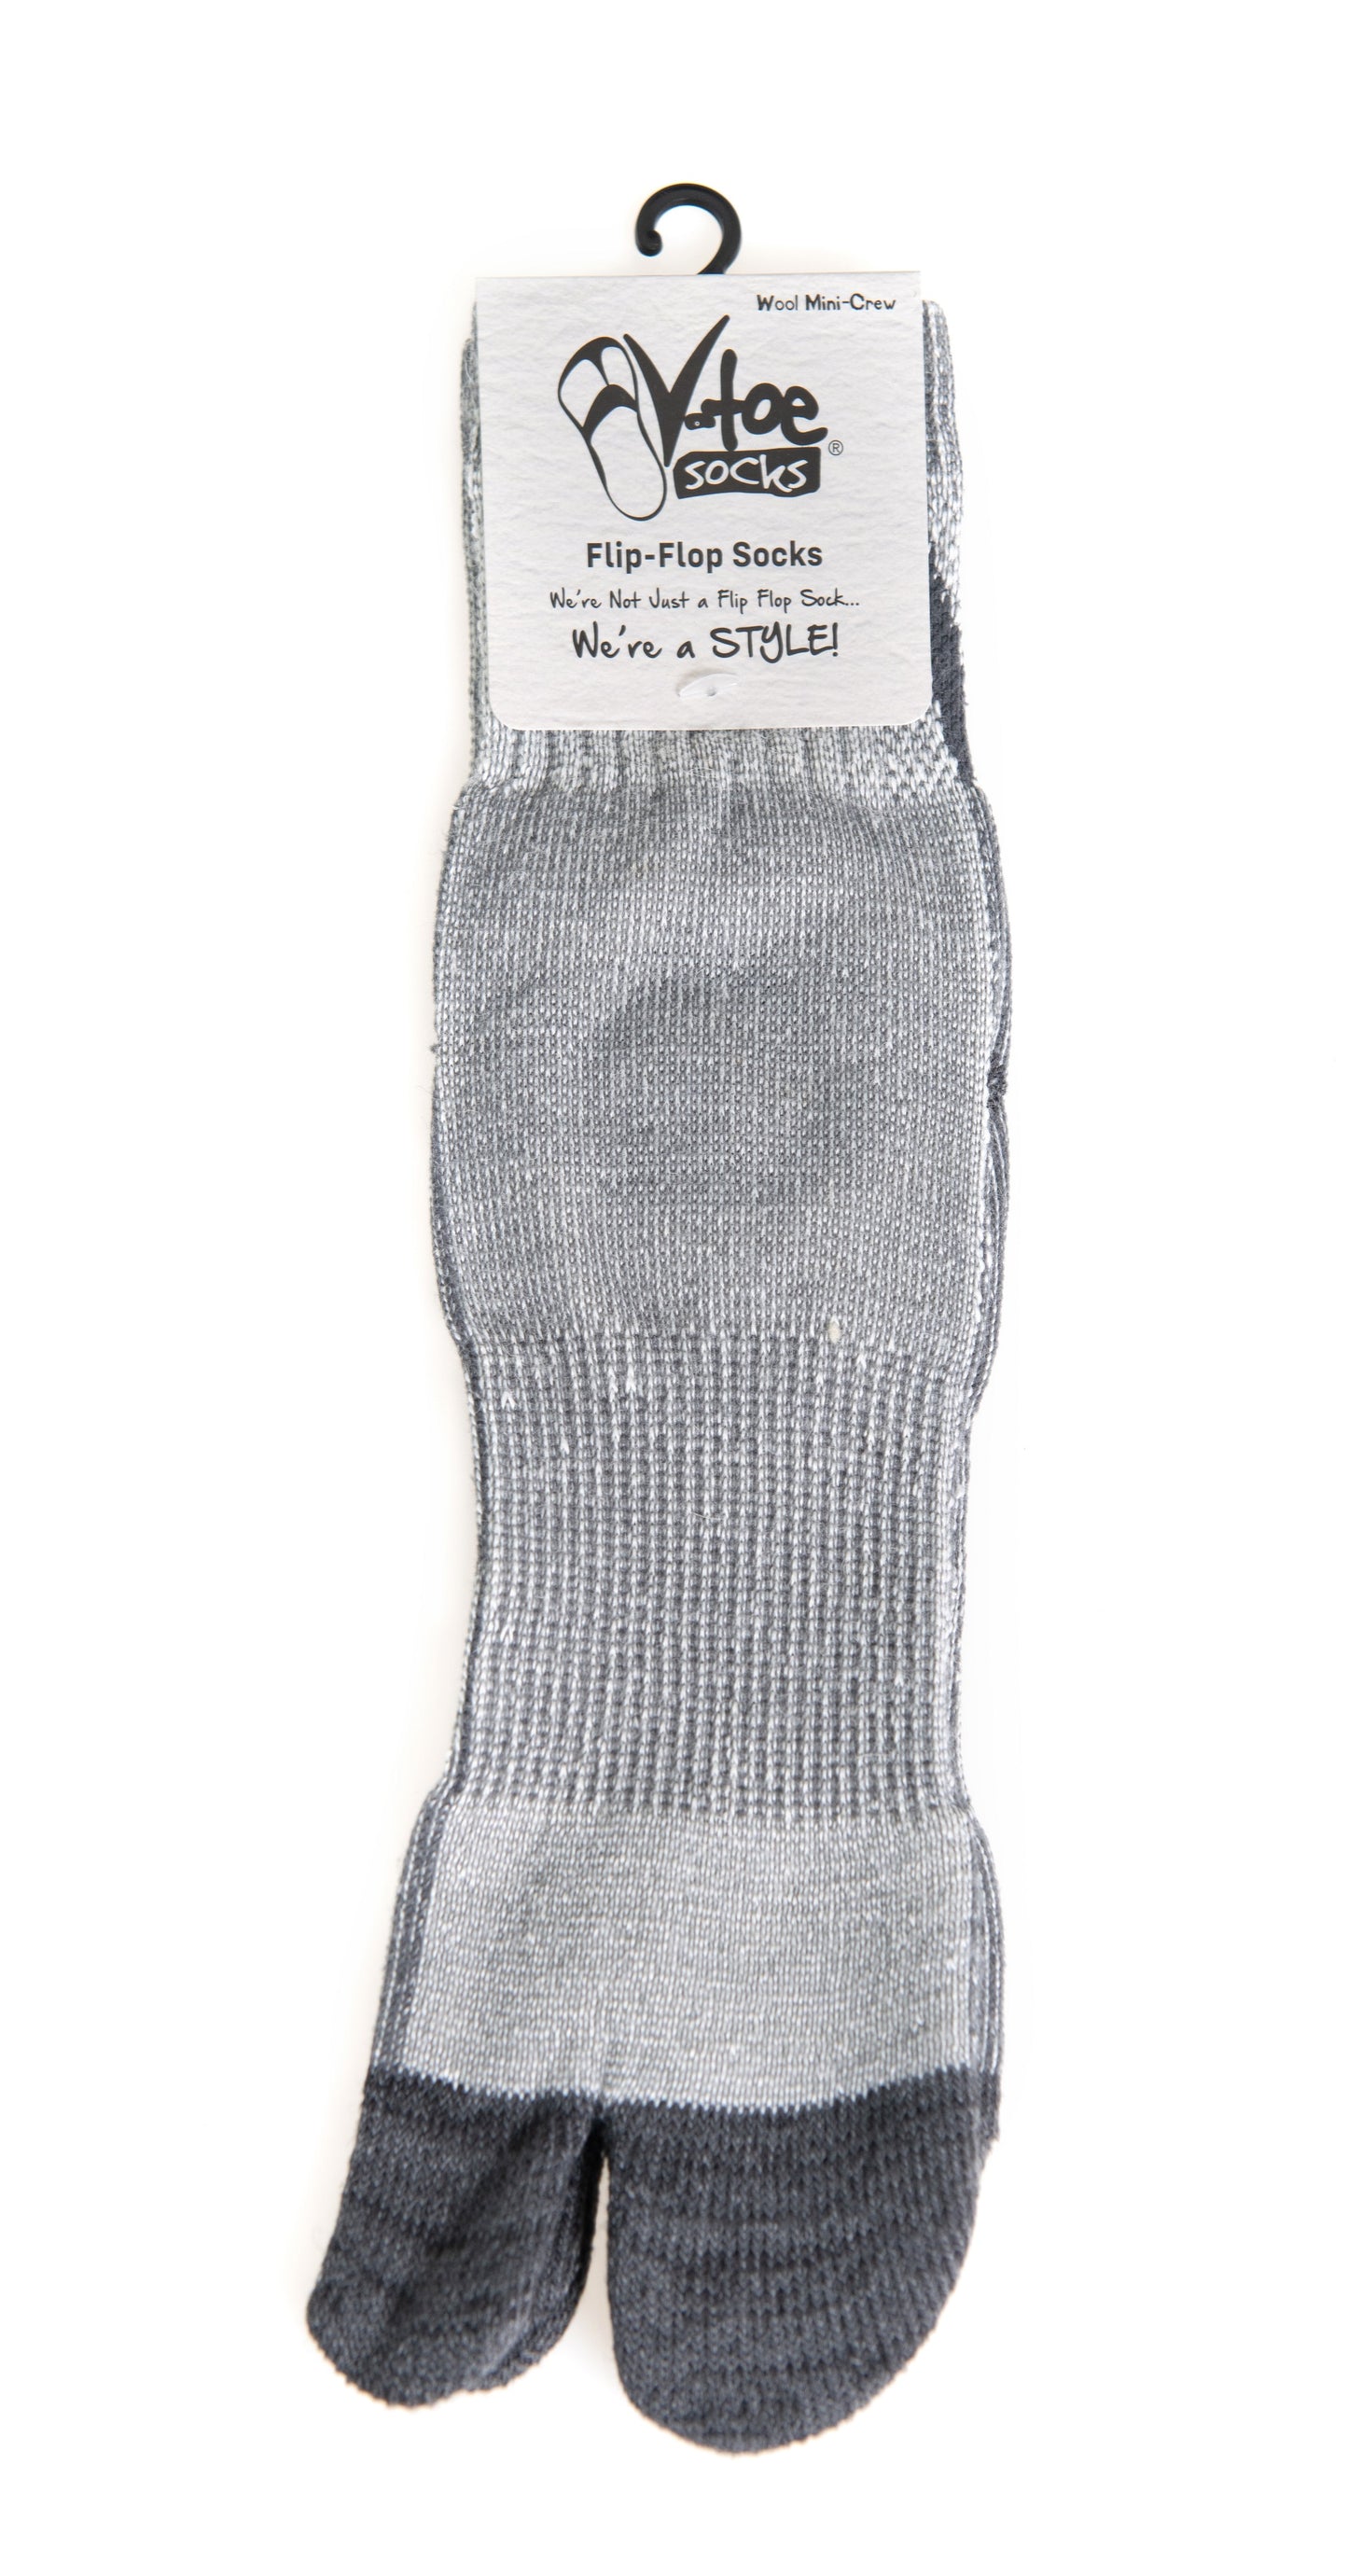 V-Toe Wool  Light Grey Casual or Hiking Flip-Flop Tabi Big Toe Chaco Socks